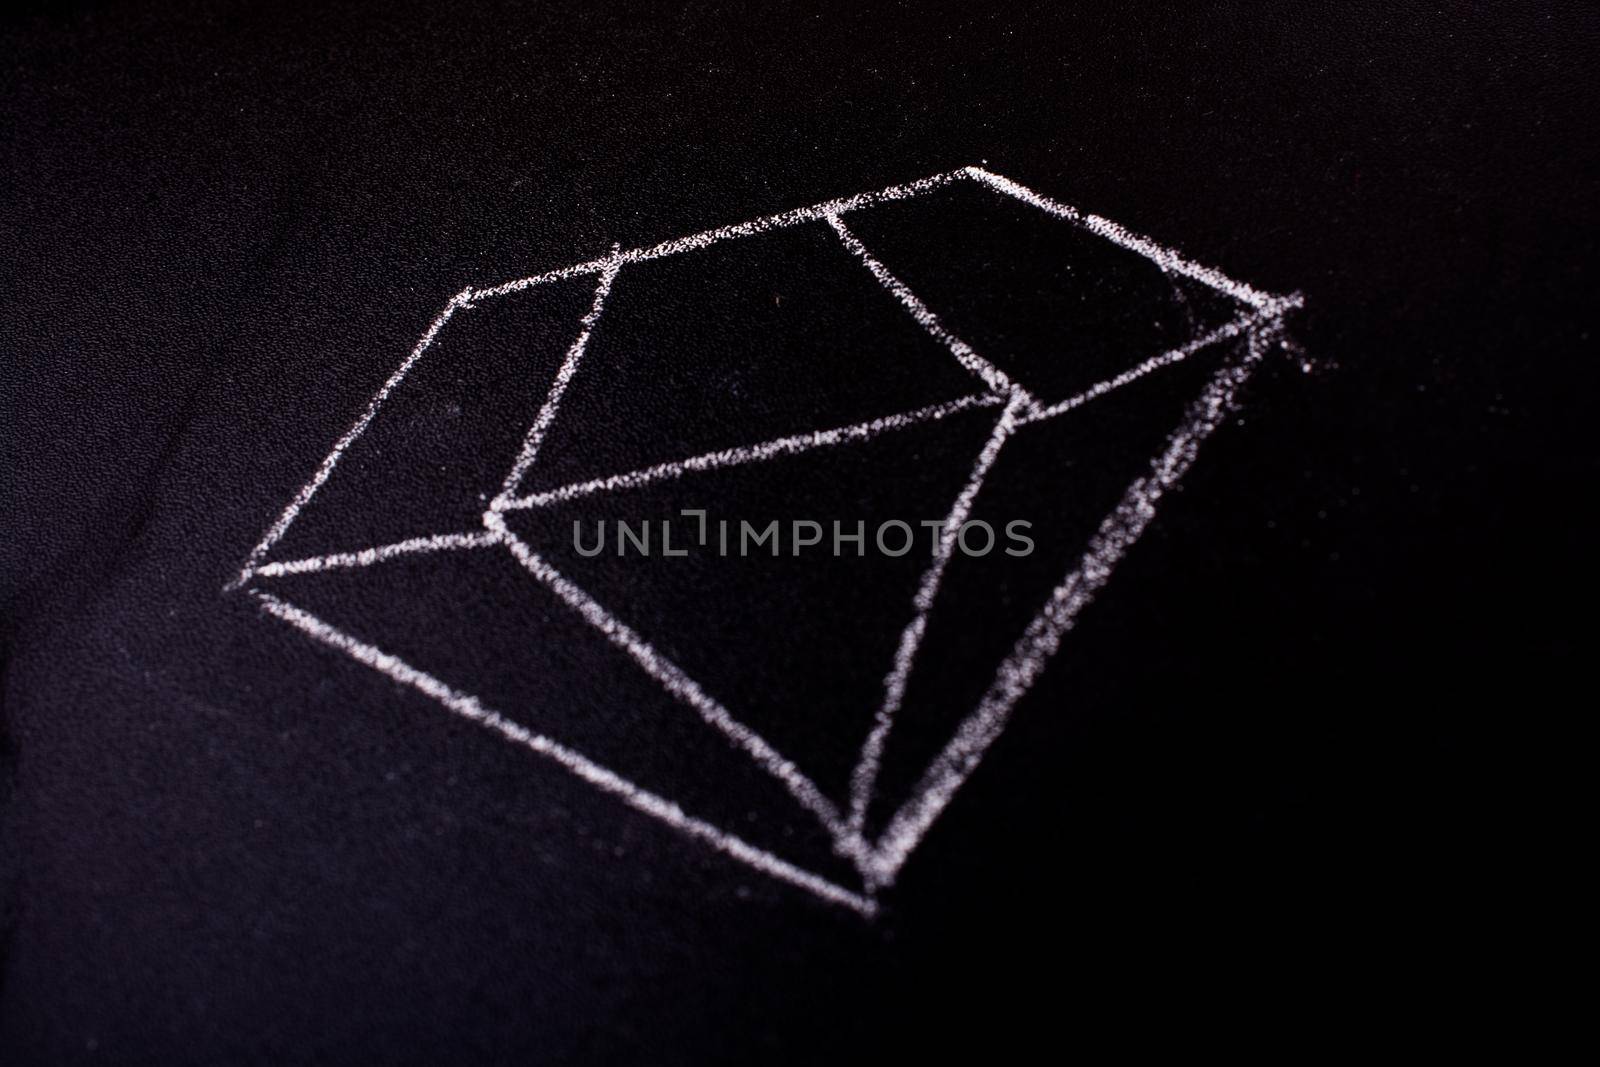 Chalk drawn diamond on a blackboard in the view